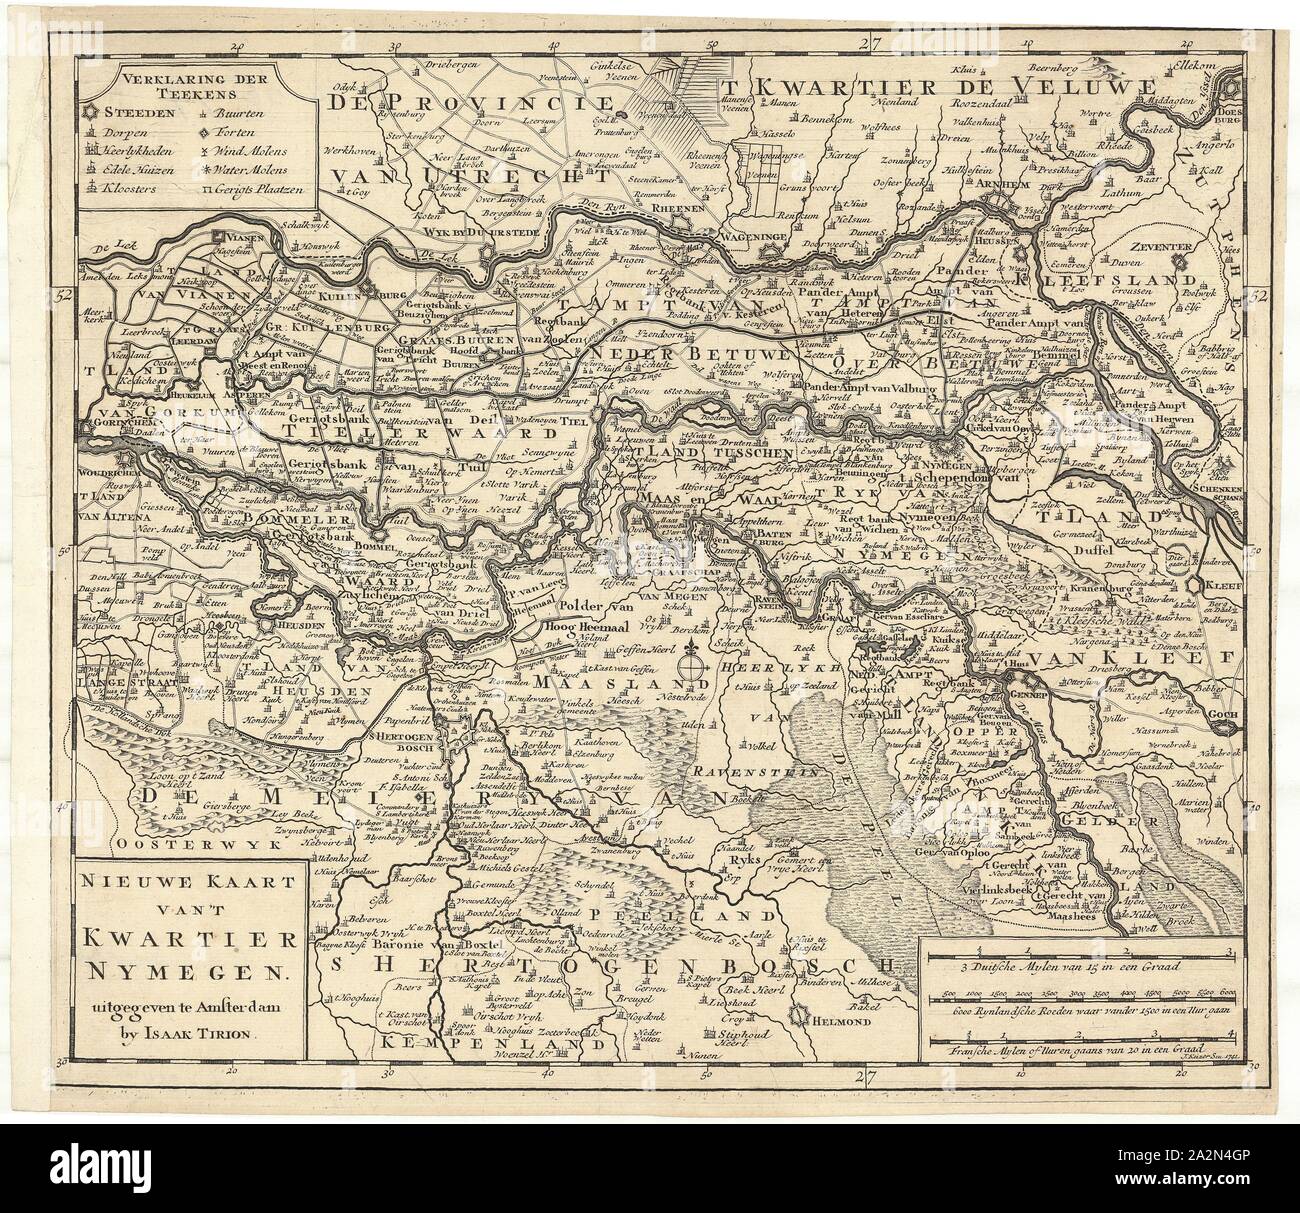 Map, Nieuwe kaart van 't Kwartier Nymegen, Jacob Keyser (1710-1745 fl.), Copperplate print Stock Photo